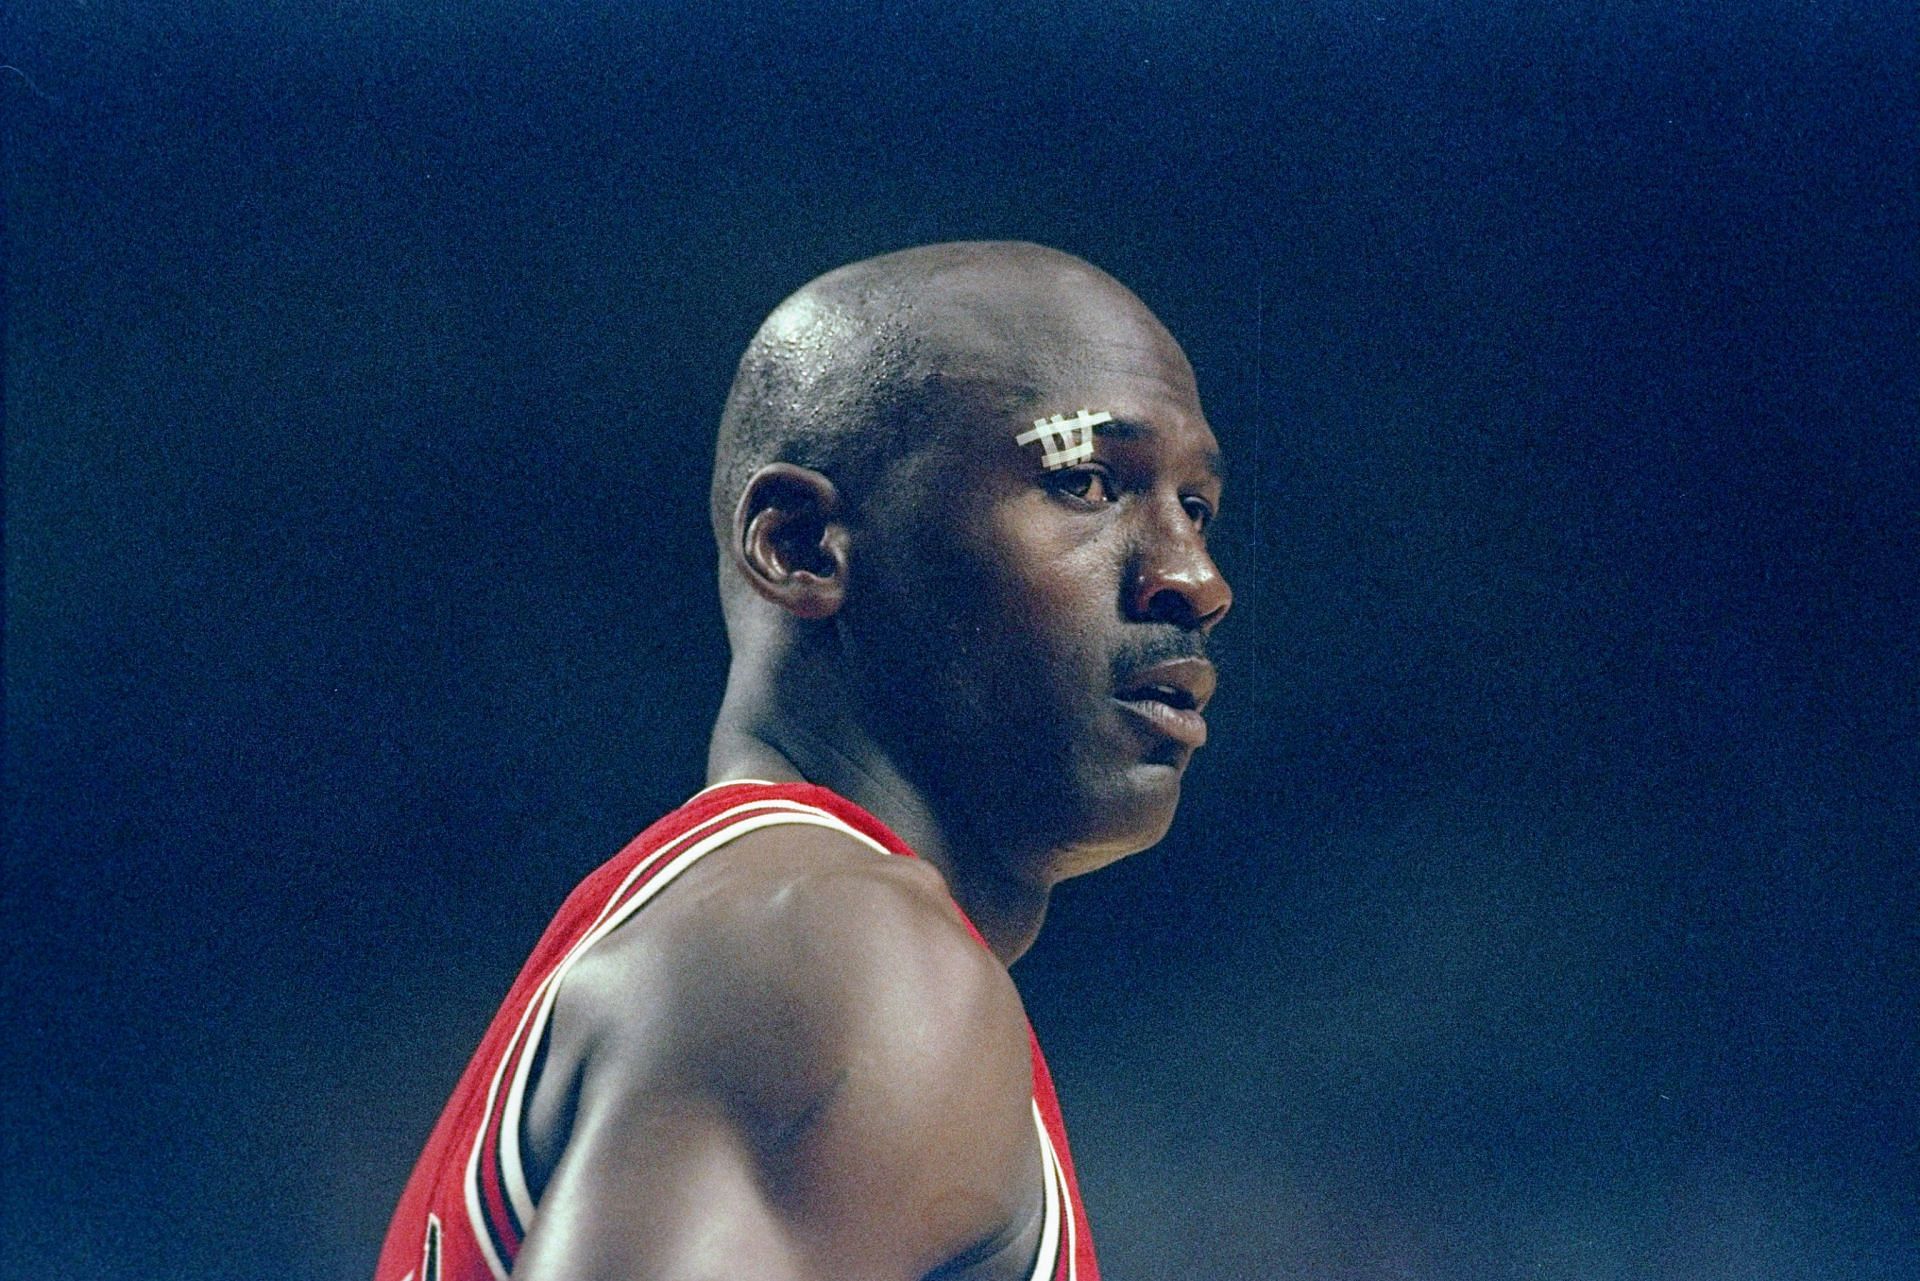 Michael Jordan #23 of the Chicago Bulls